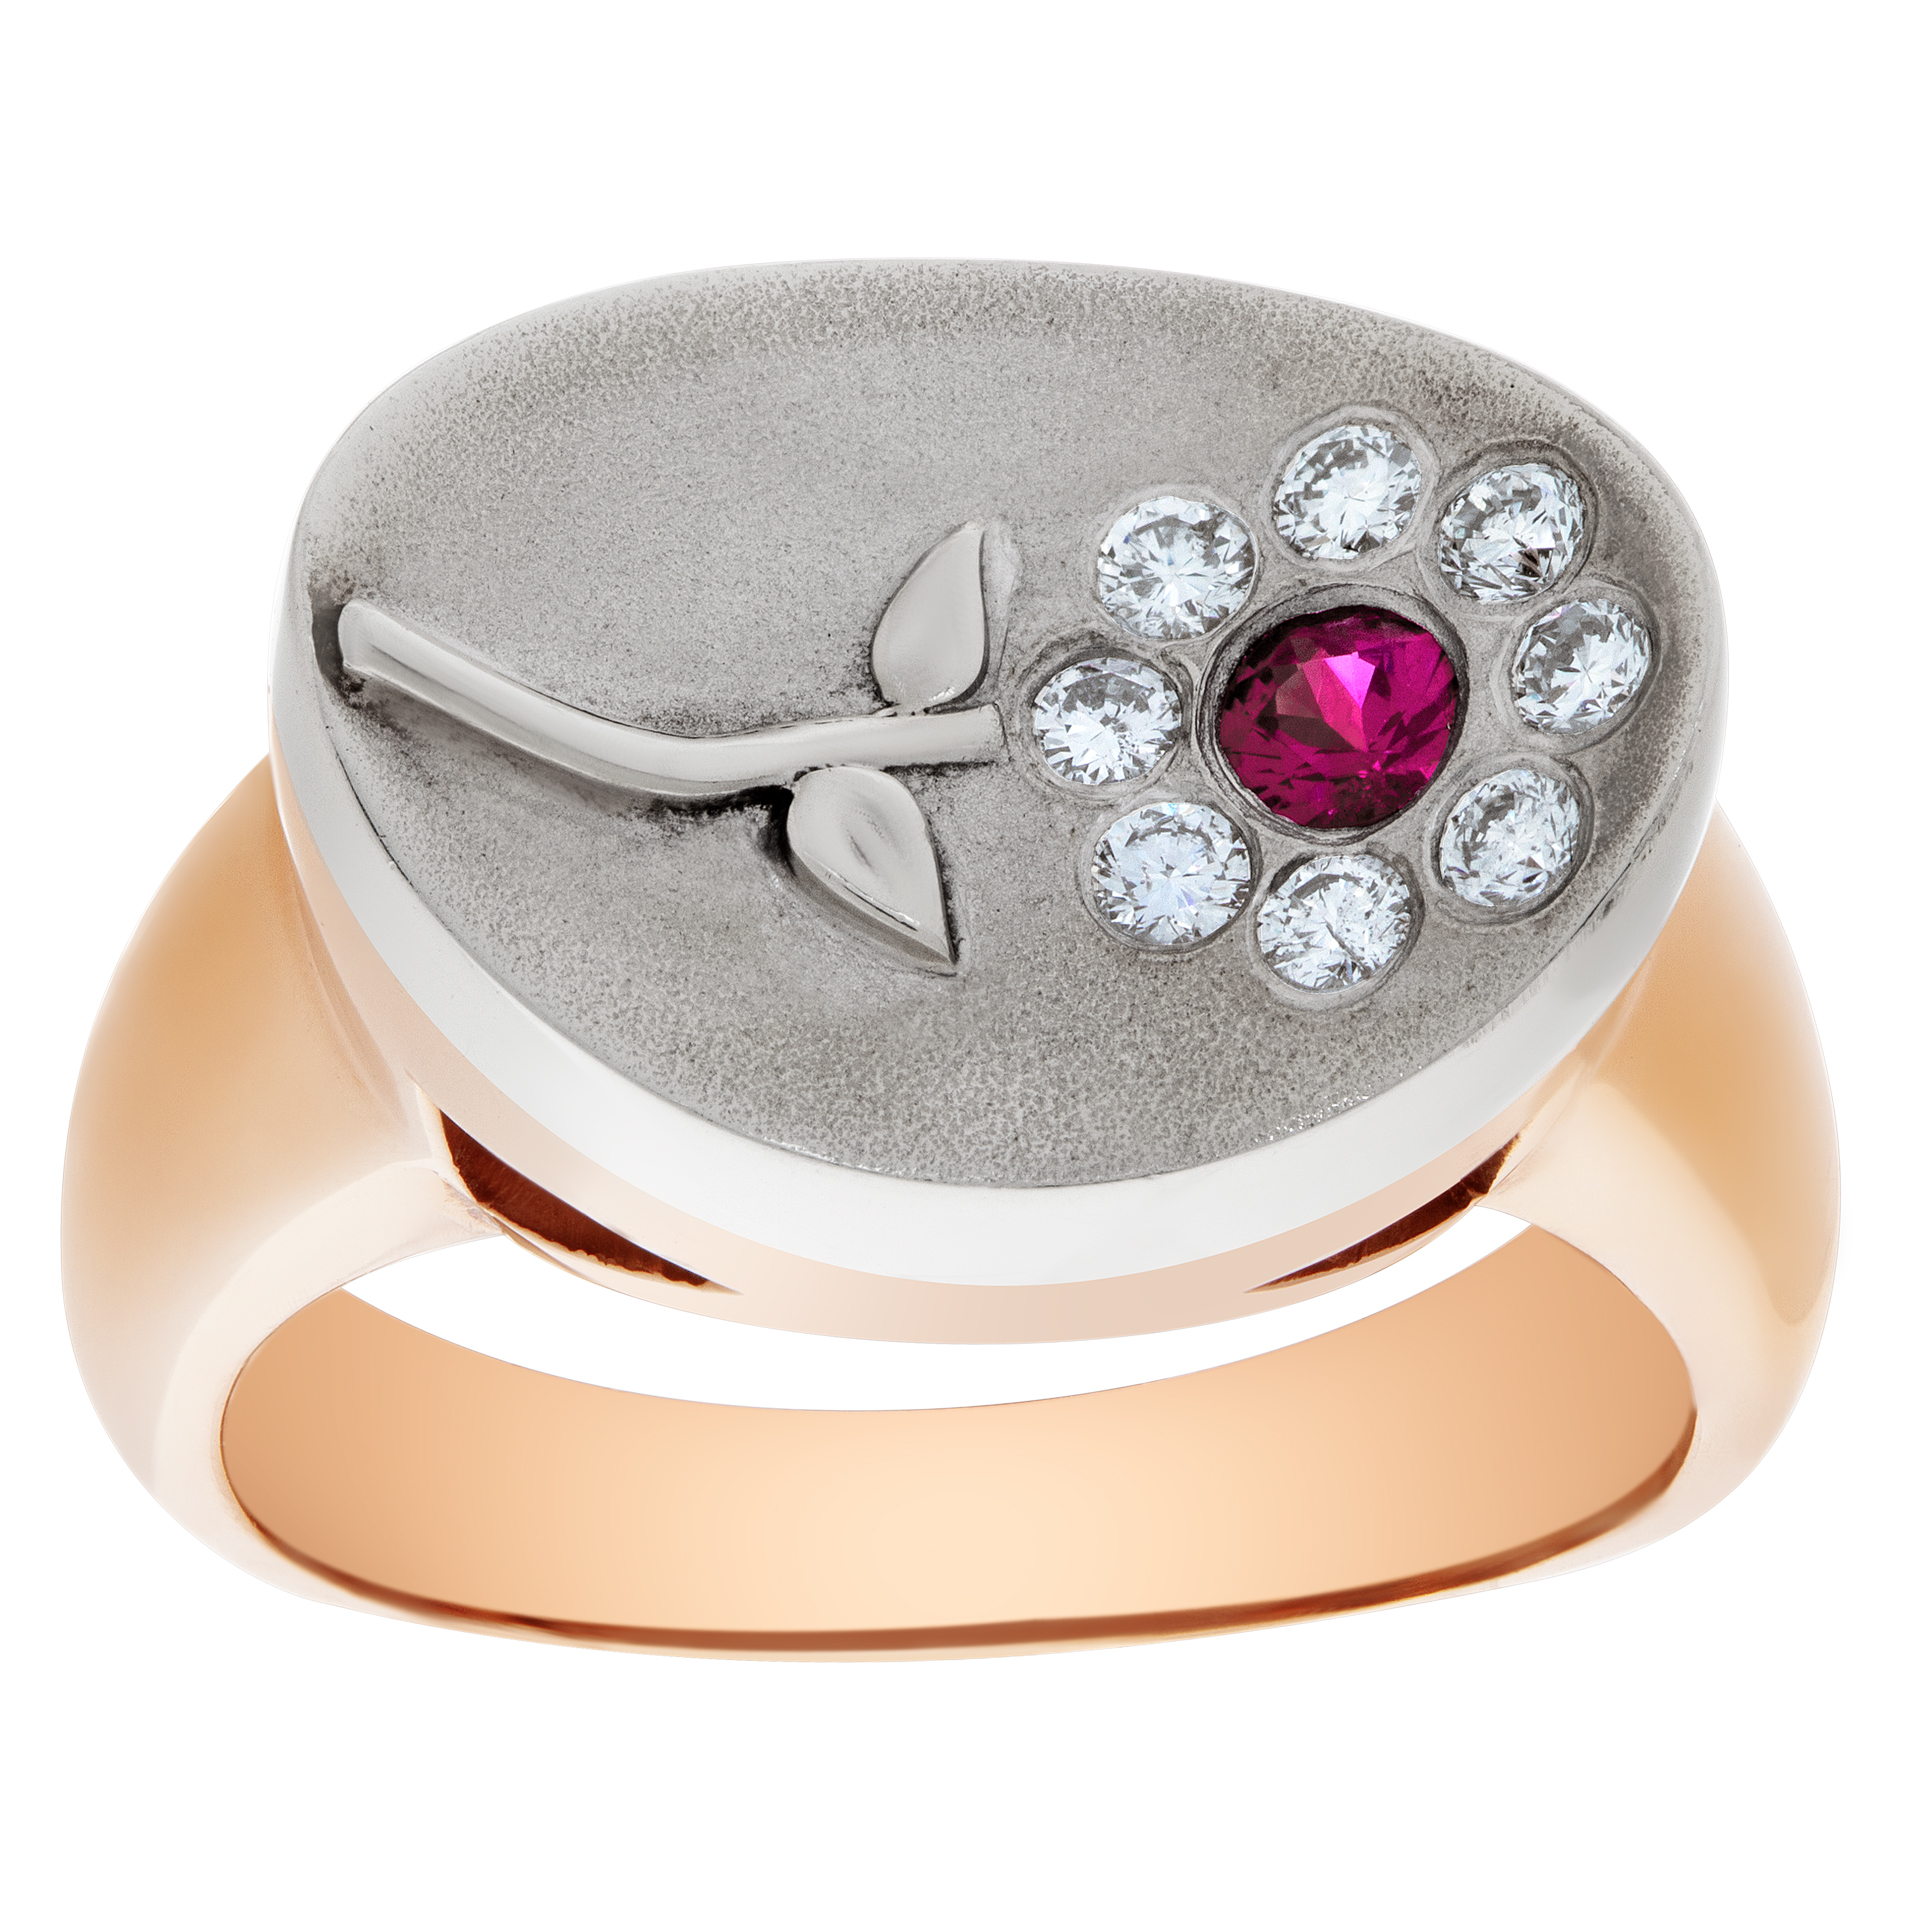 Ruby & diamond flower ring in 14k rose and white gold